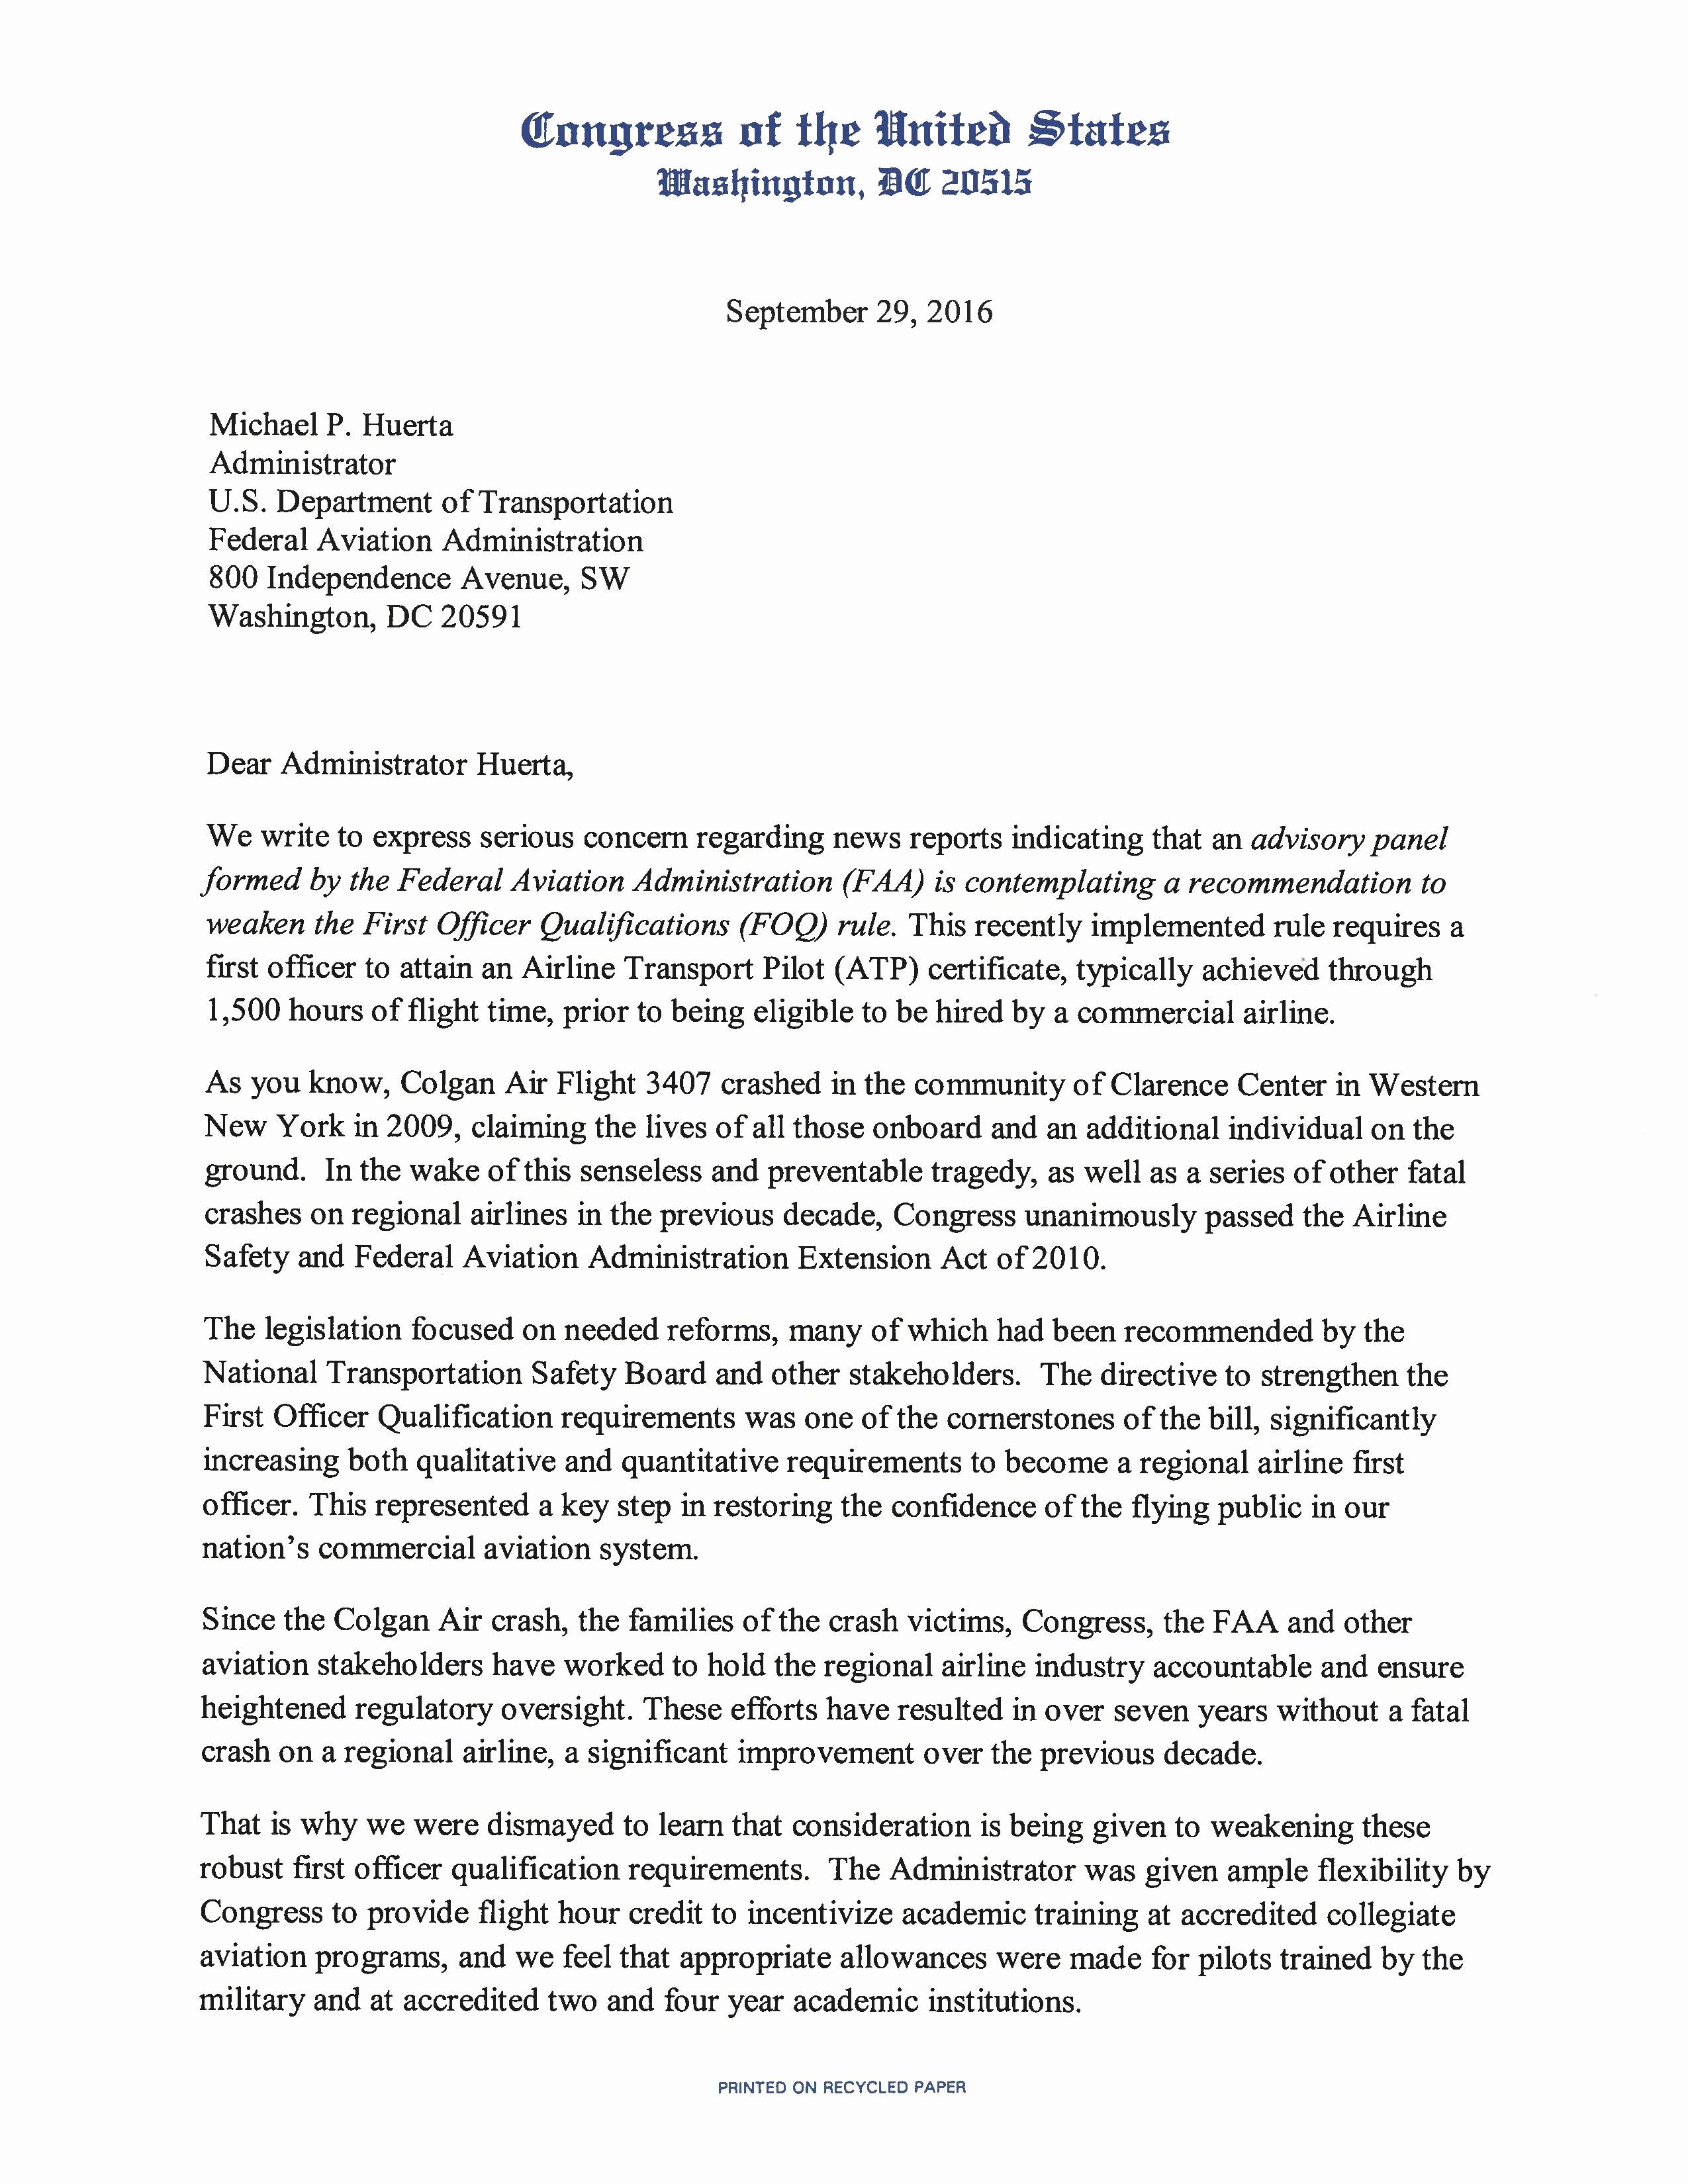 congressman higgins letter to administrator huerta